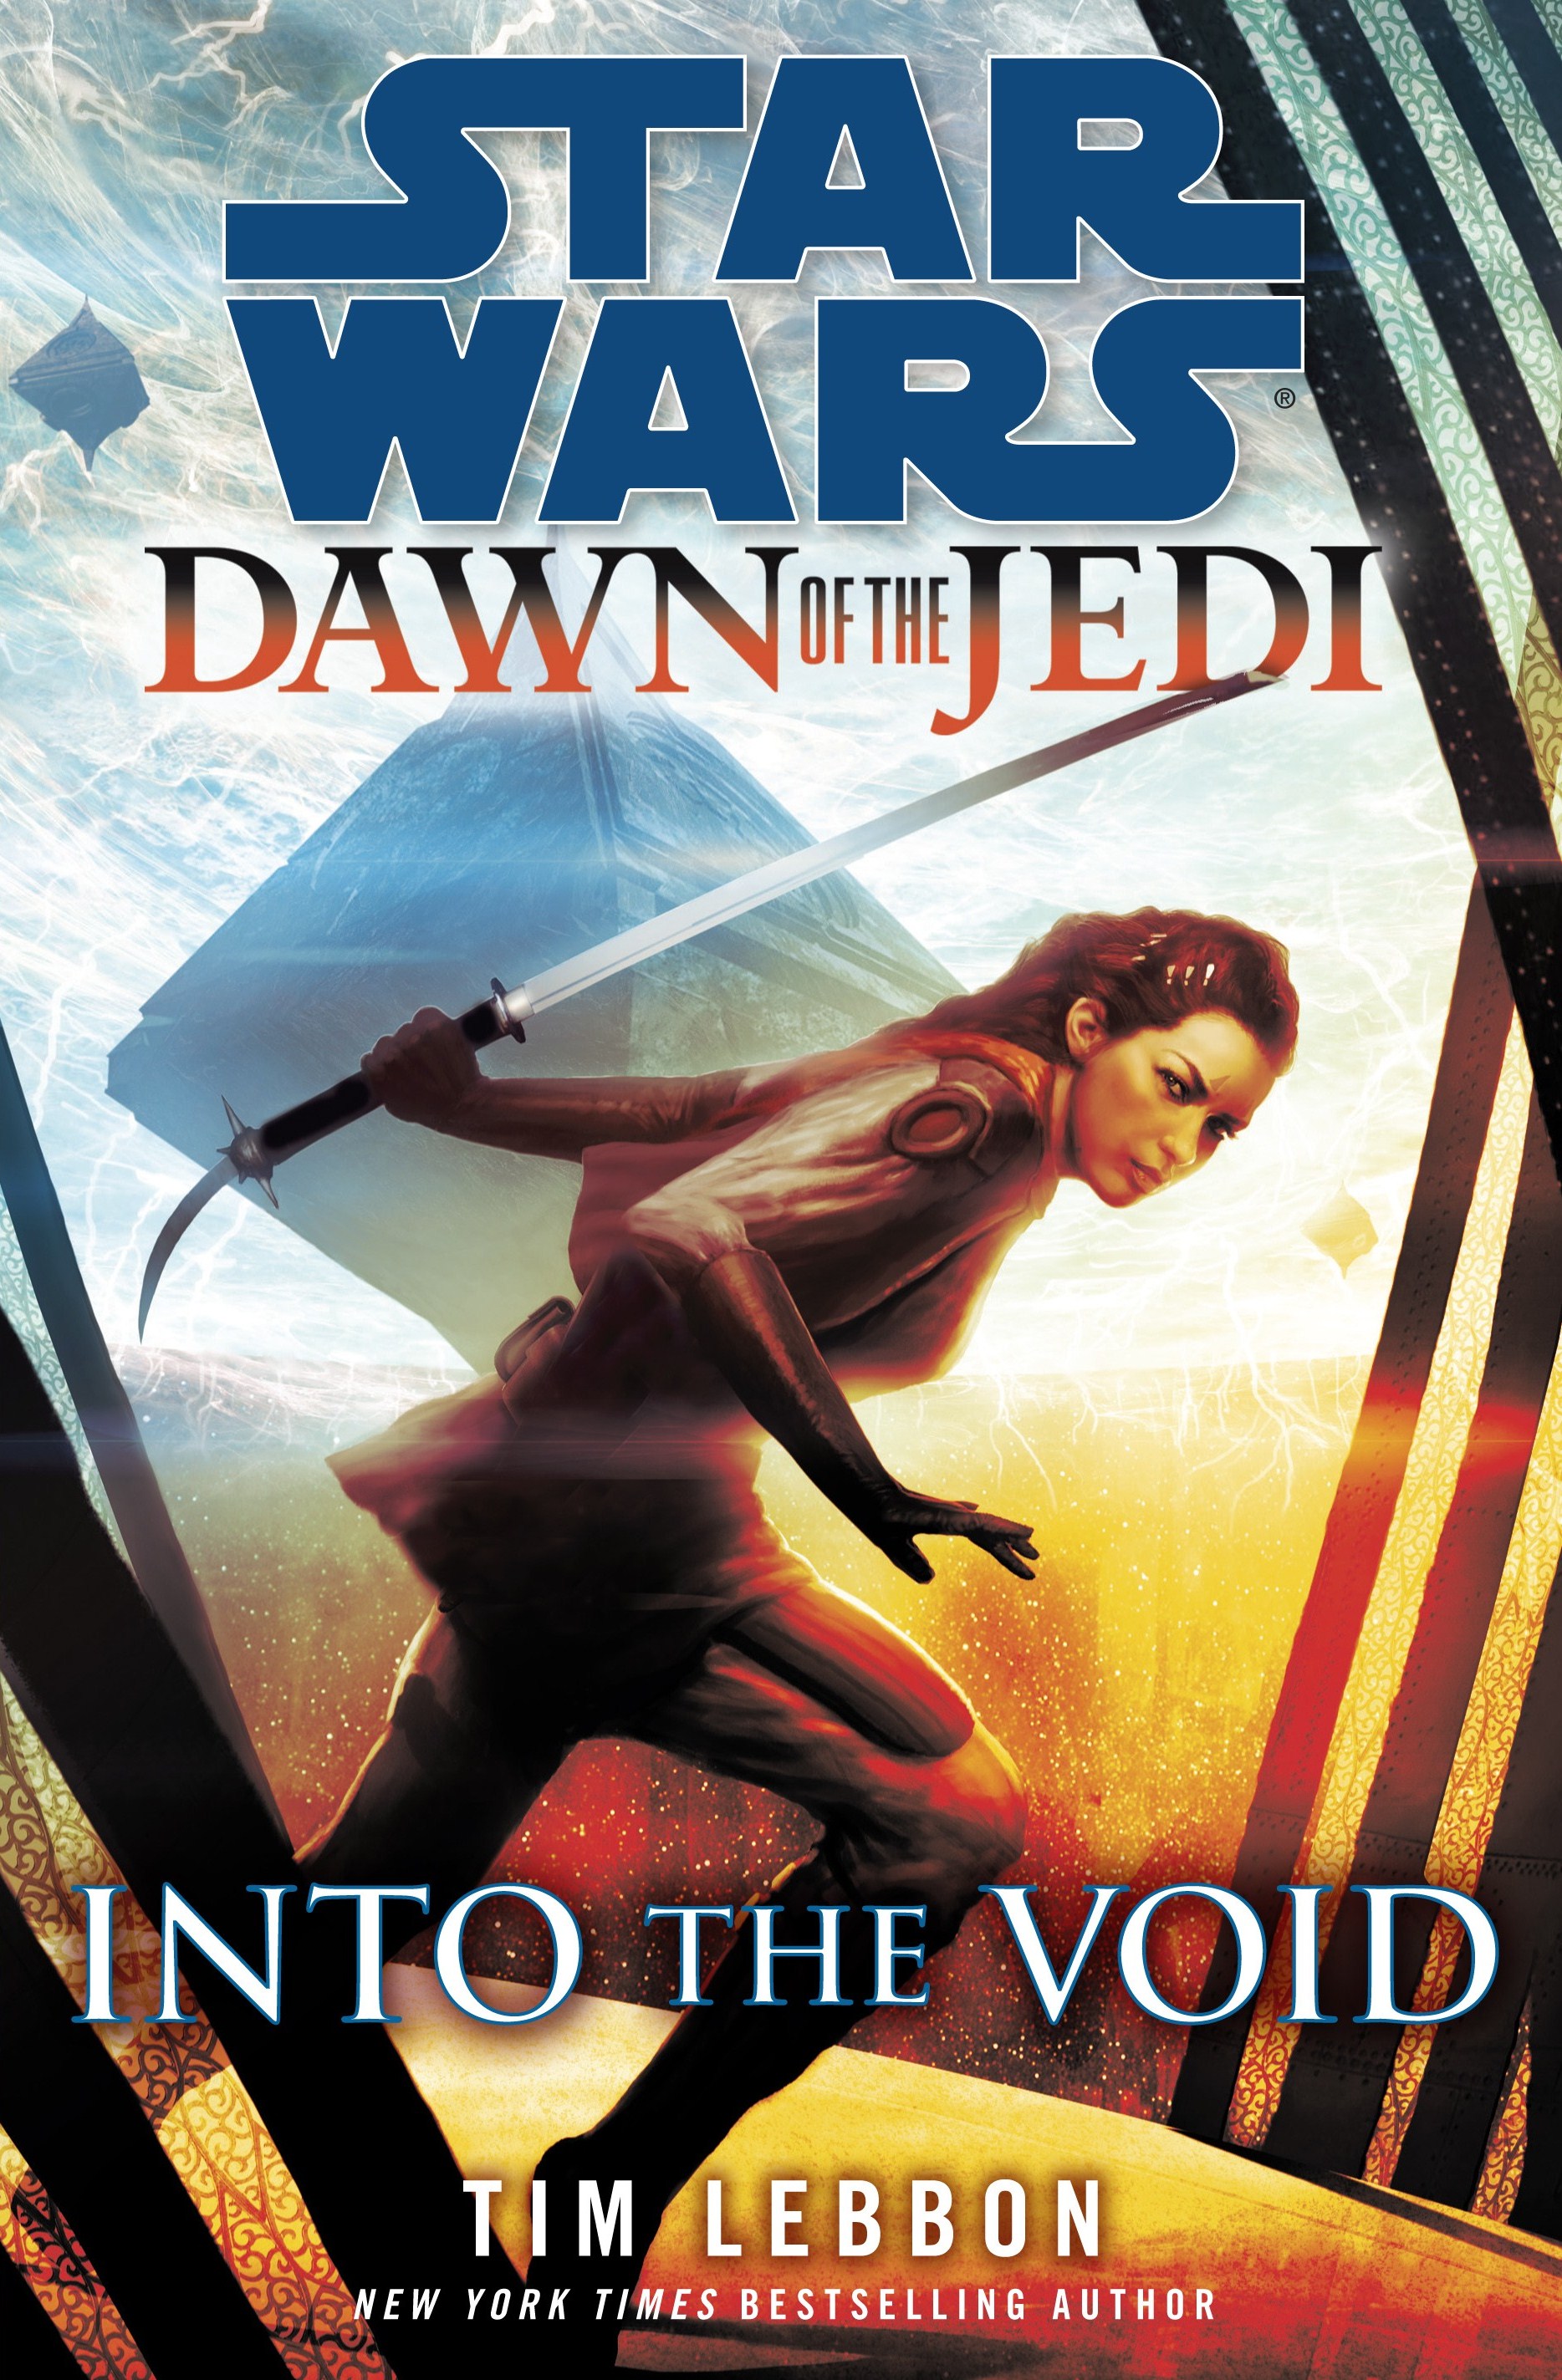 Star Wars: Revenge of the Sith (novelization), Wookieepedia